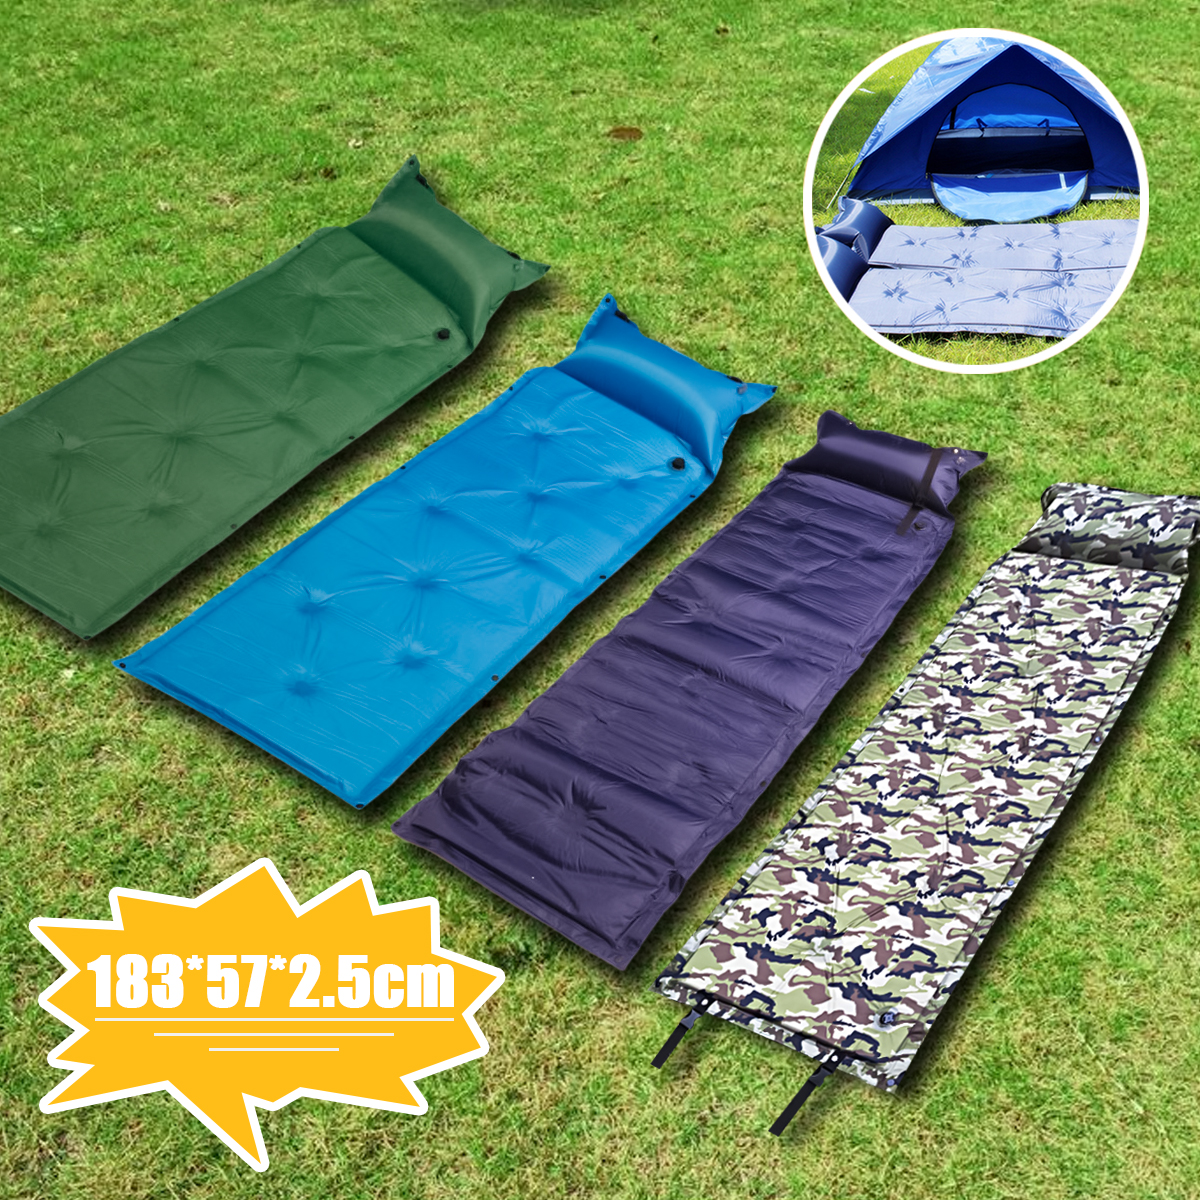 IPReereg-183x57x25cm-Self-Inflatable-Air-Mattress-Camping-Moisture-Proof-Pad-Sleeping-Mat-1190414-1